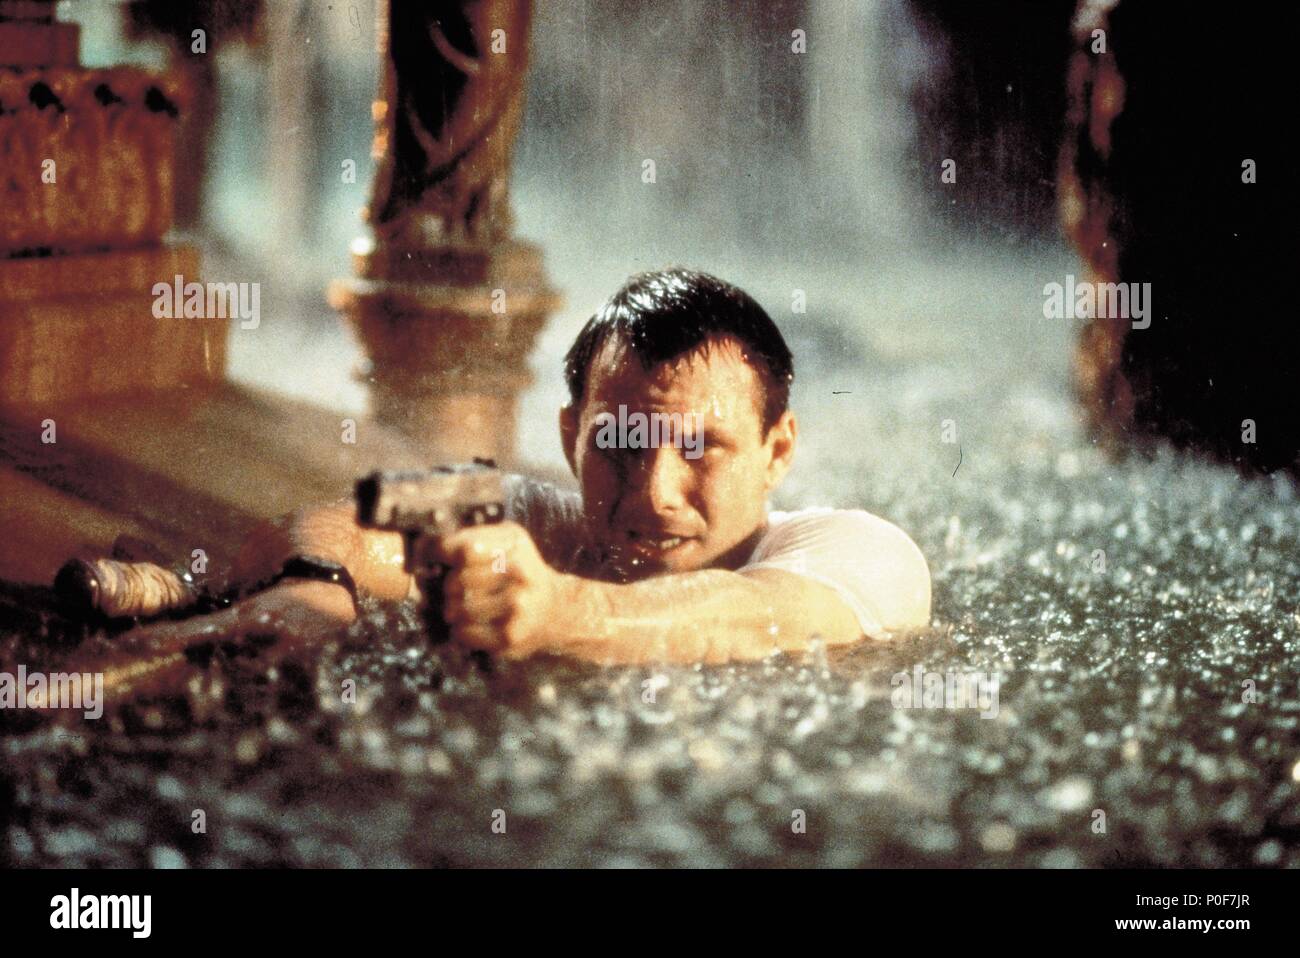 Original Film Title: HARD RAIN. English Title: HARD RAIN. Film Director:  MIKAEL SALOMON. Year: 1998. Stars: CHRISTIAN SLATER. Credit: POLYGRAM /  Album Stock Photo - Alamy